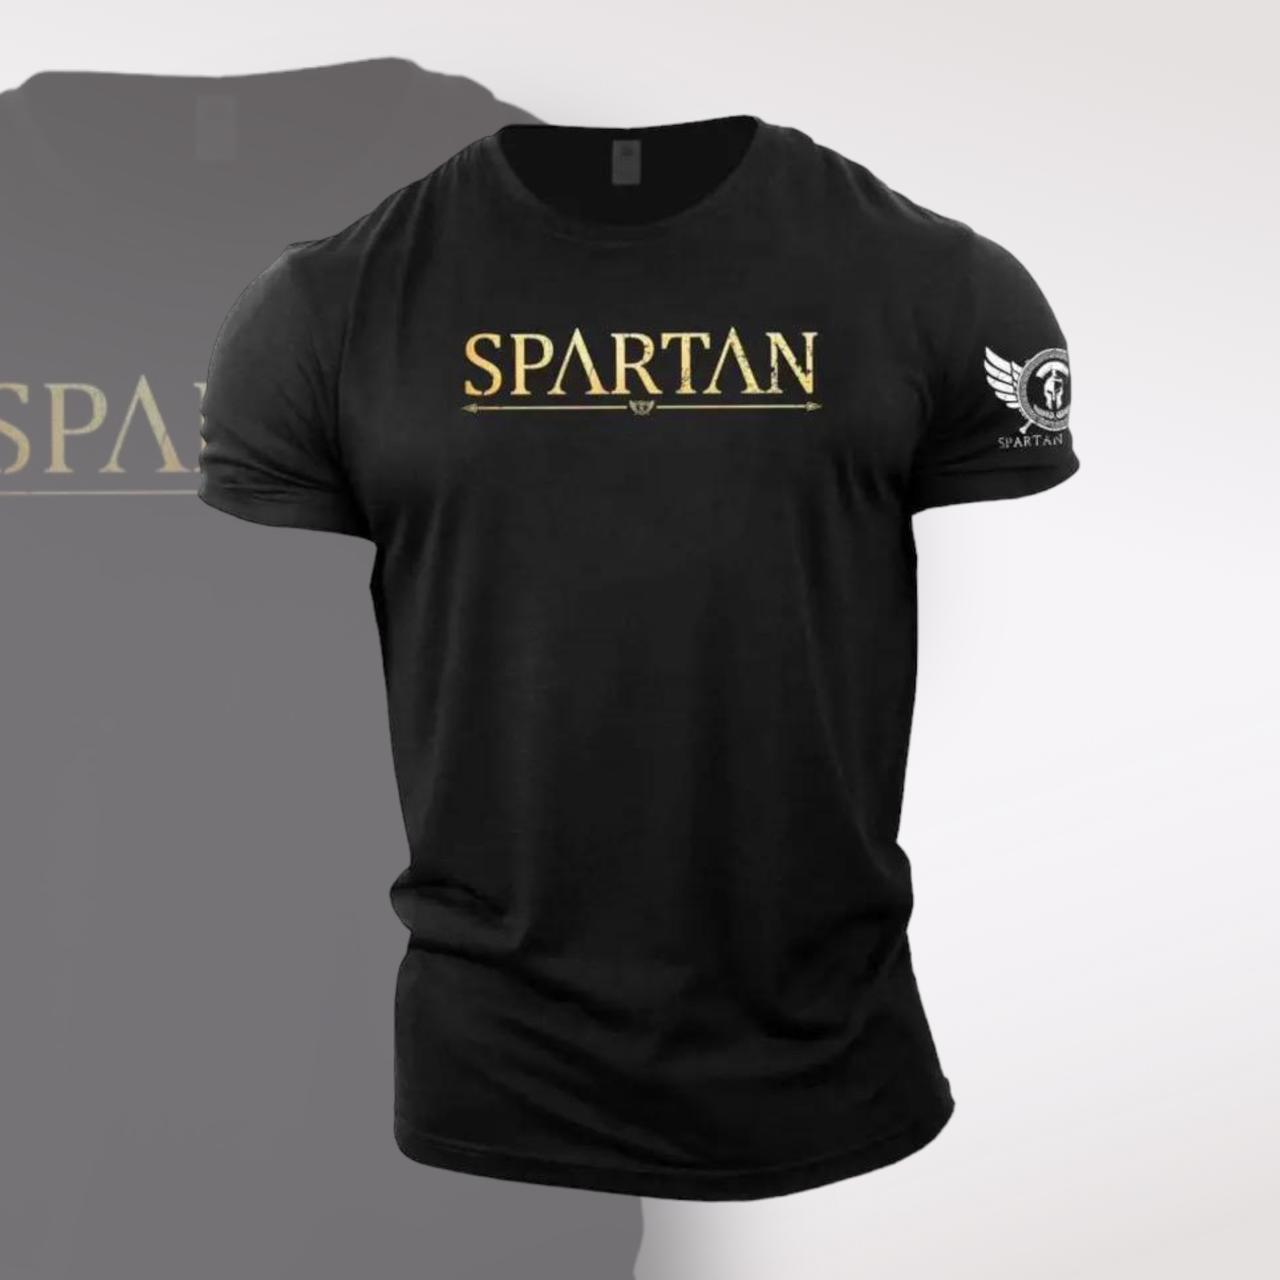 Spartan Slogan Cotton T-Shirt